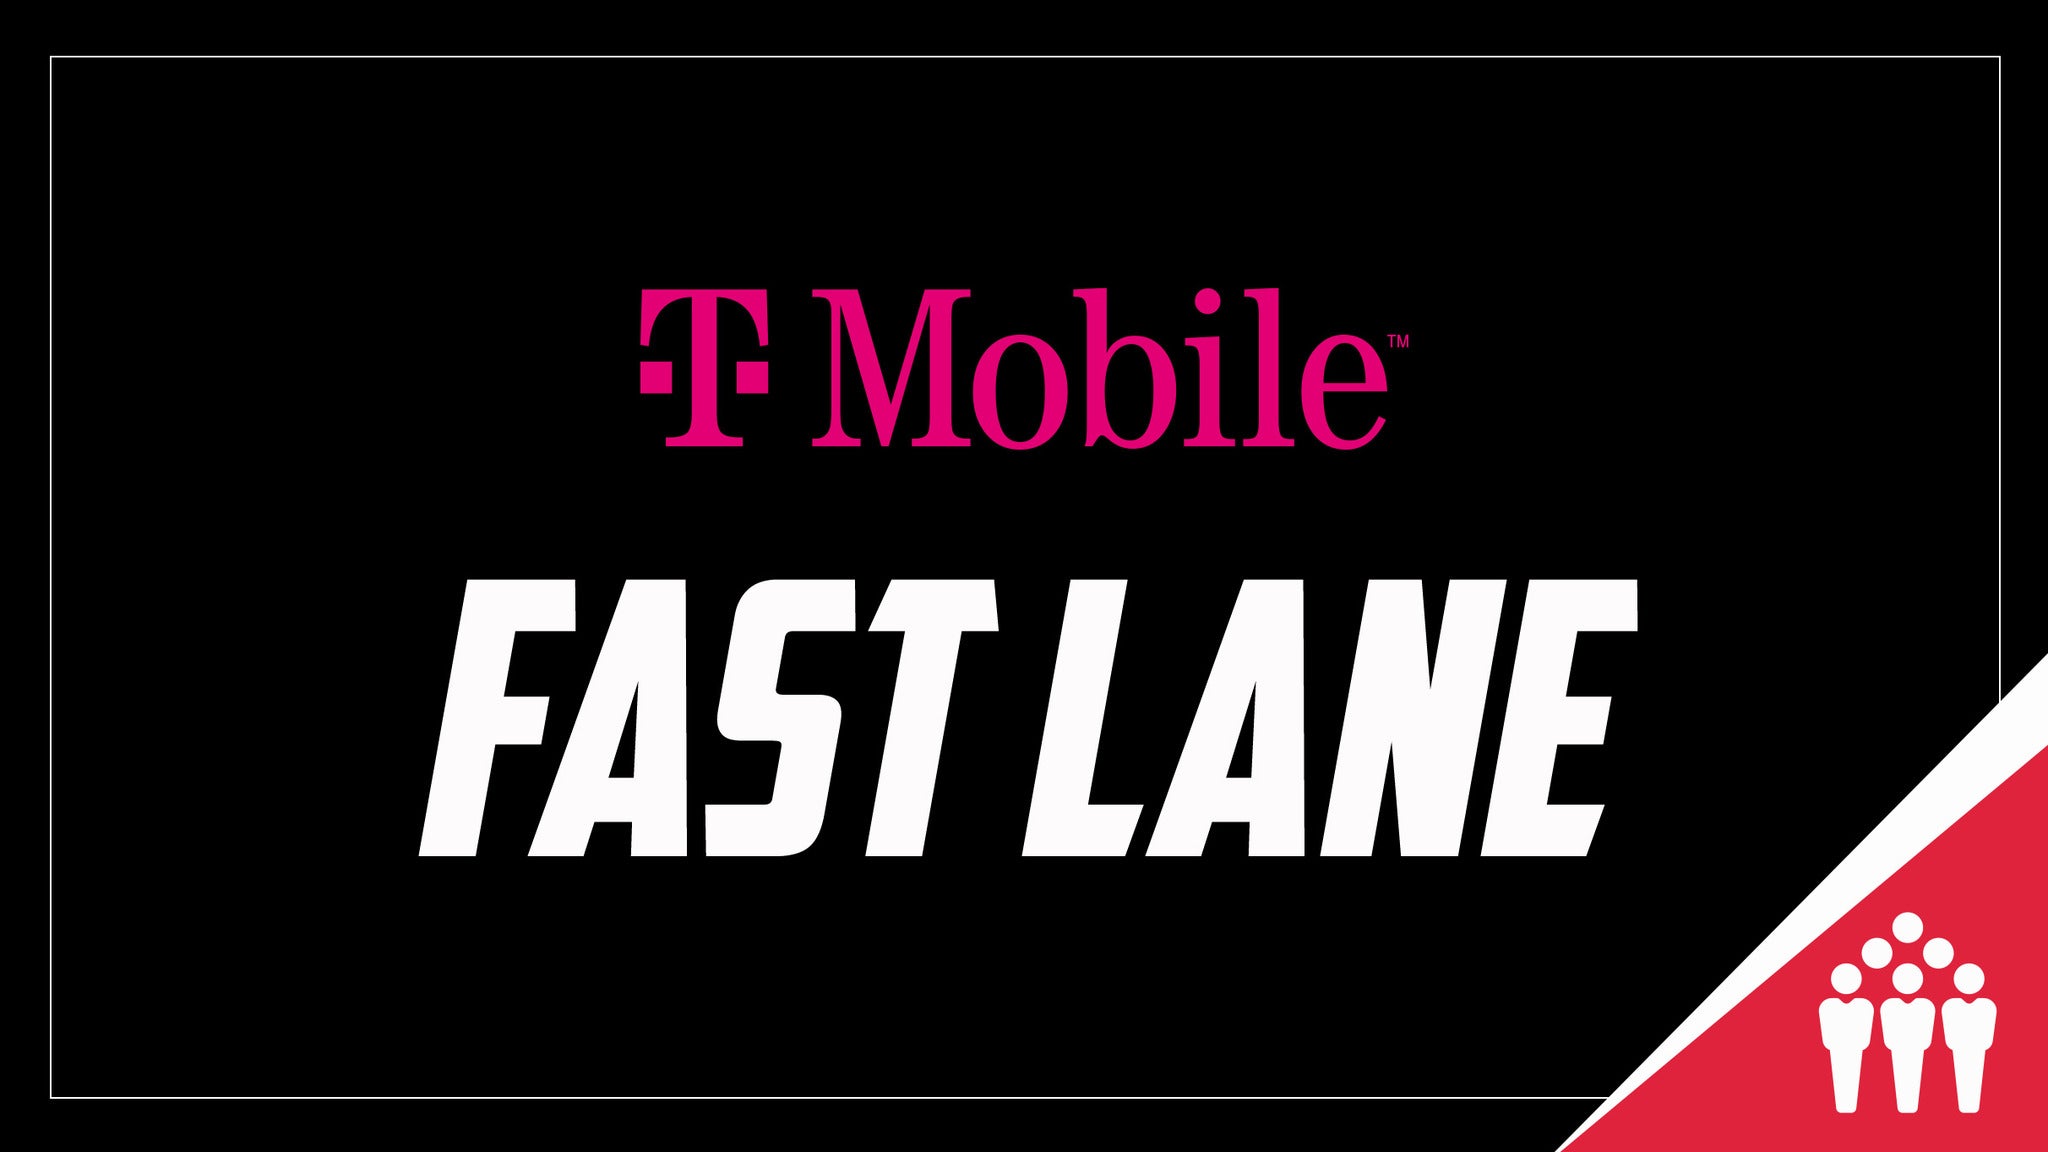 Live Nation T-Mobile Fast Lane: Blink-182 - NOT A CONCERT TICKET in George promo photo for Live Nation presale offer code